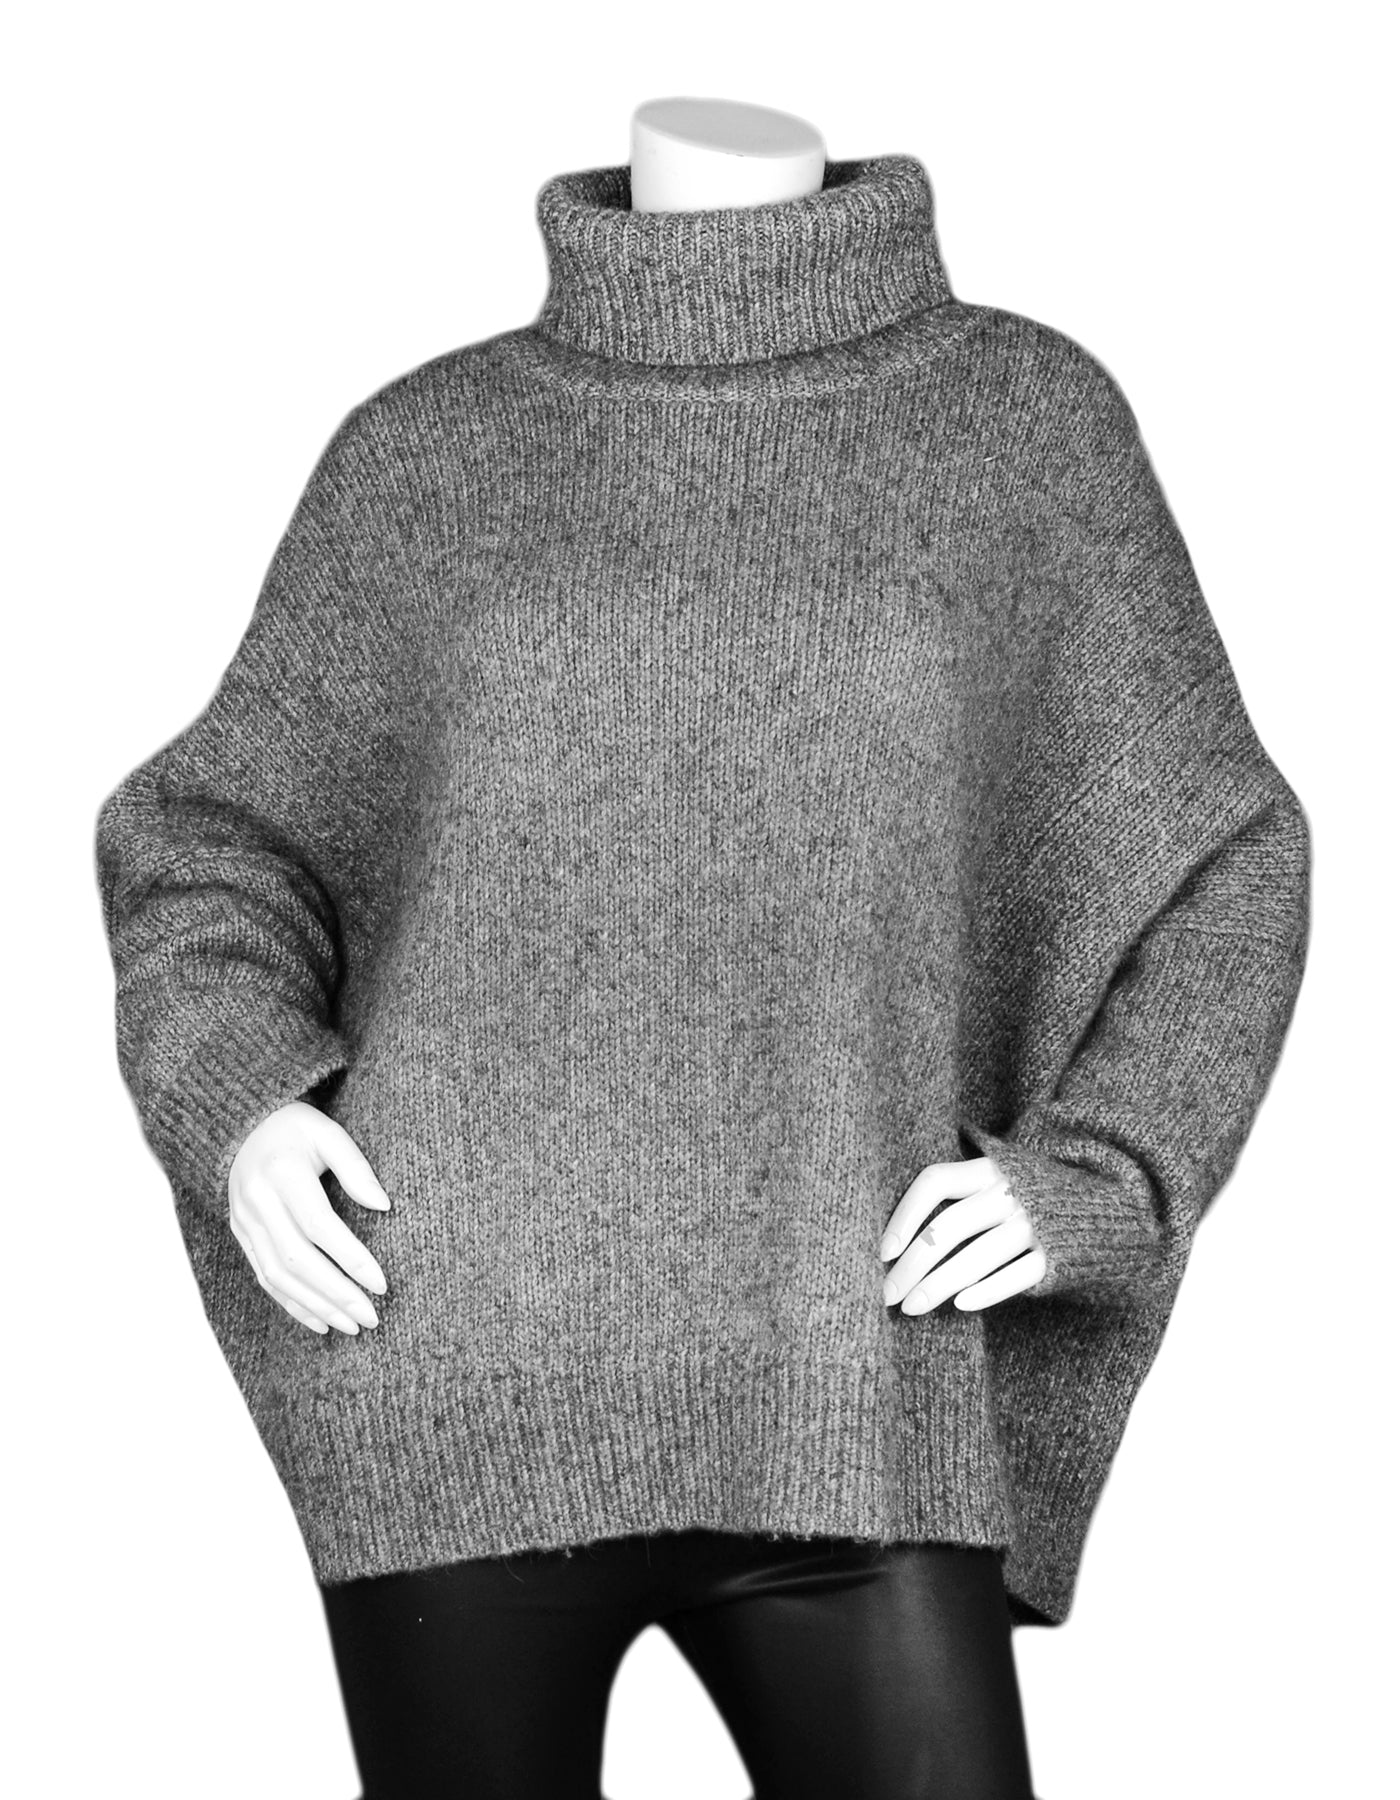 Co 2019 Grey Oversized Alpaca and Prima Cotton-Blend Turtleneck Sweater sz M/L